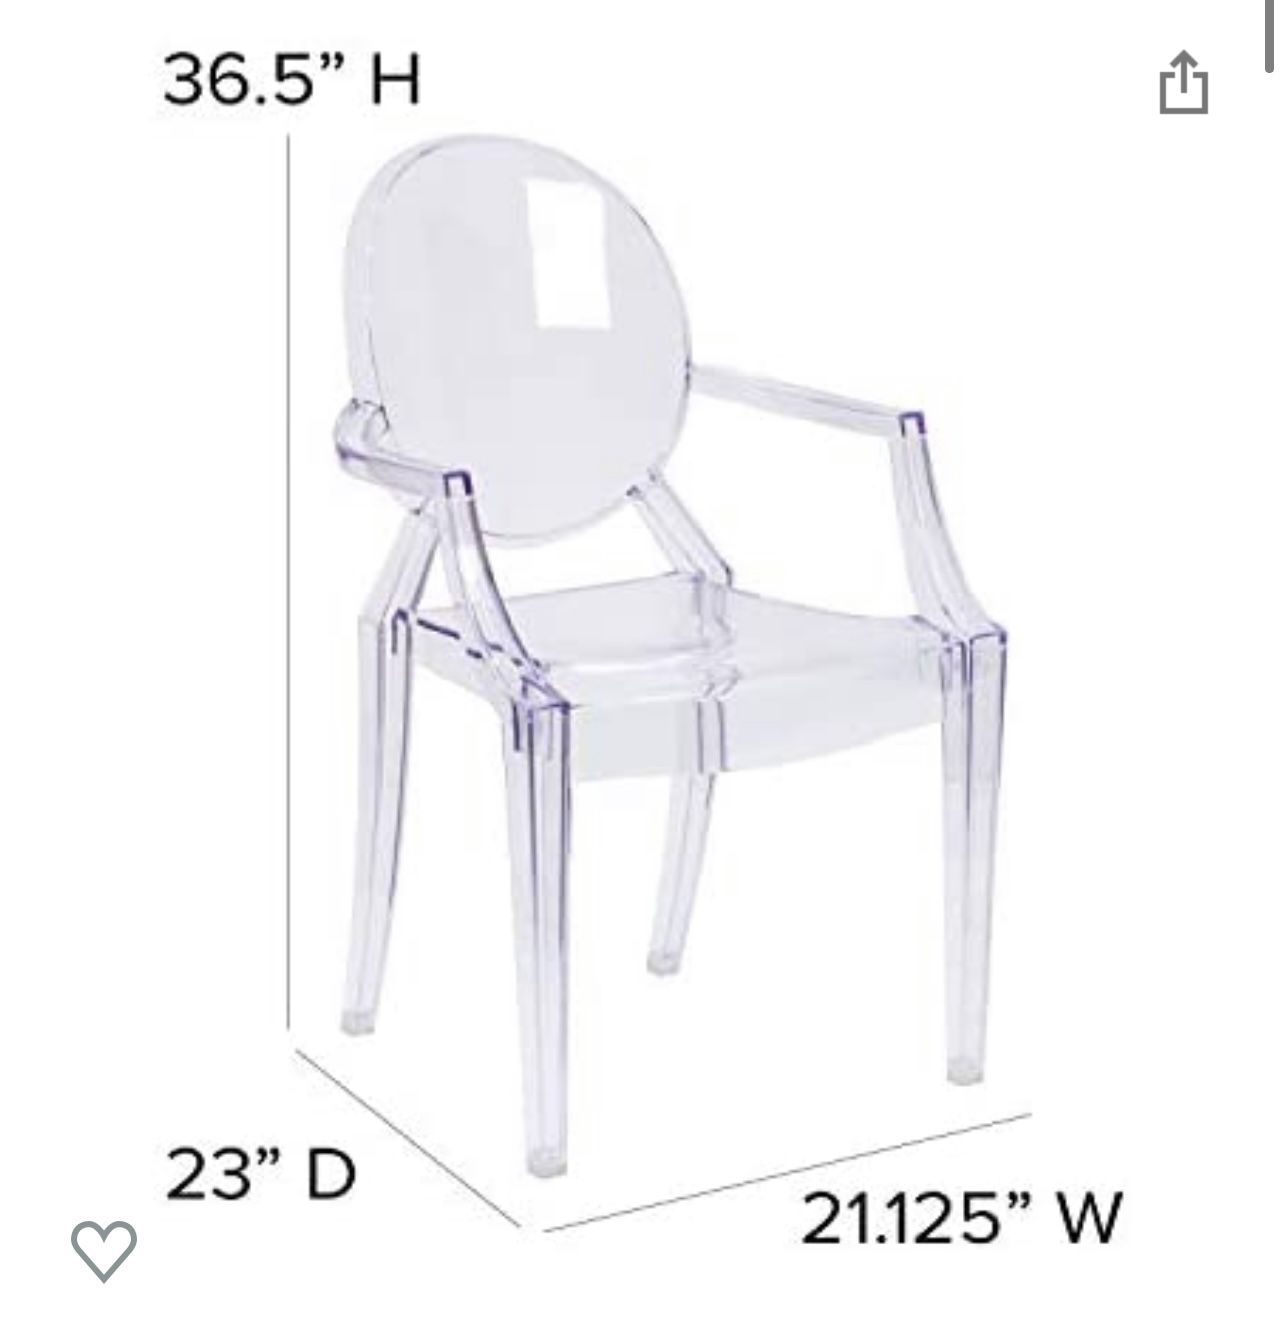 2 Acrylic Chairs PENDING SALE